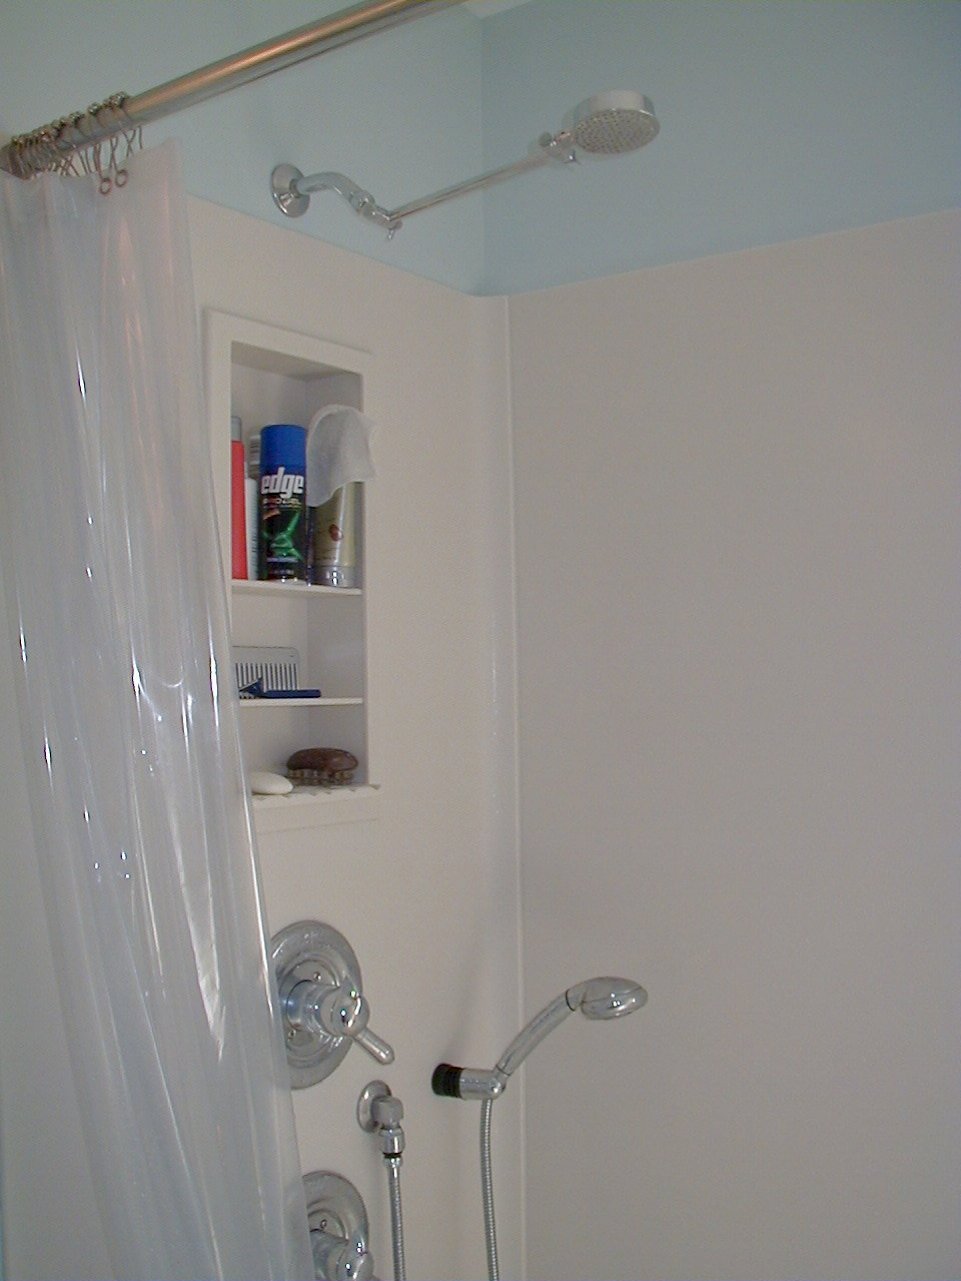 Corian surround on the shower walls.